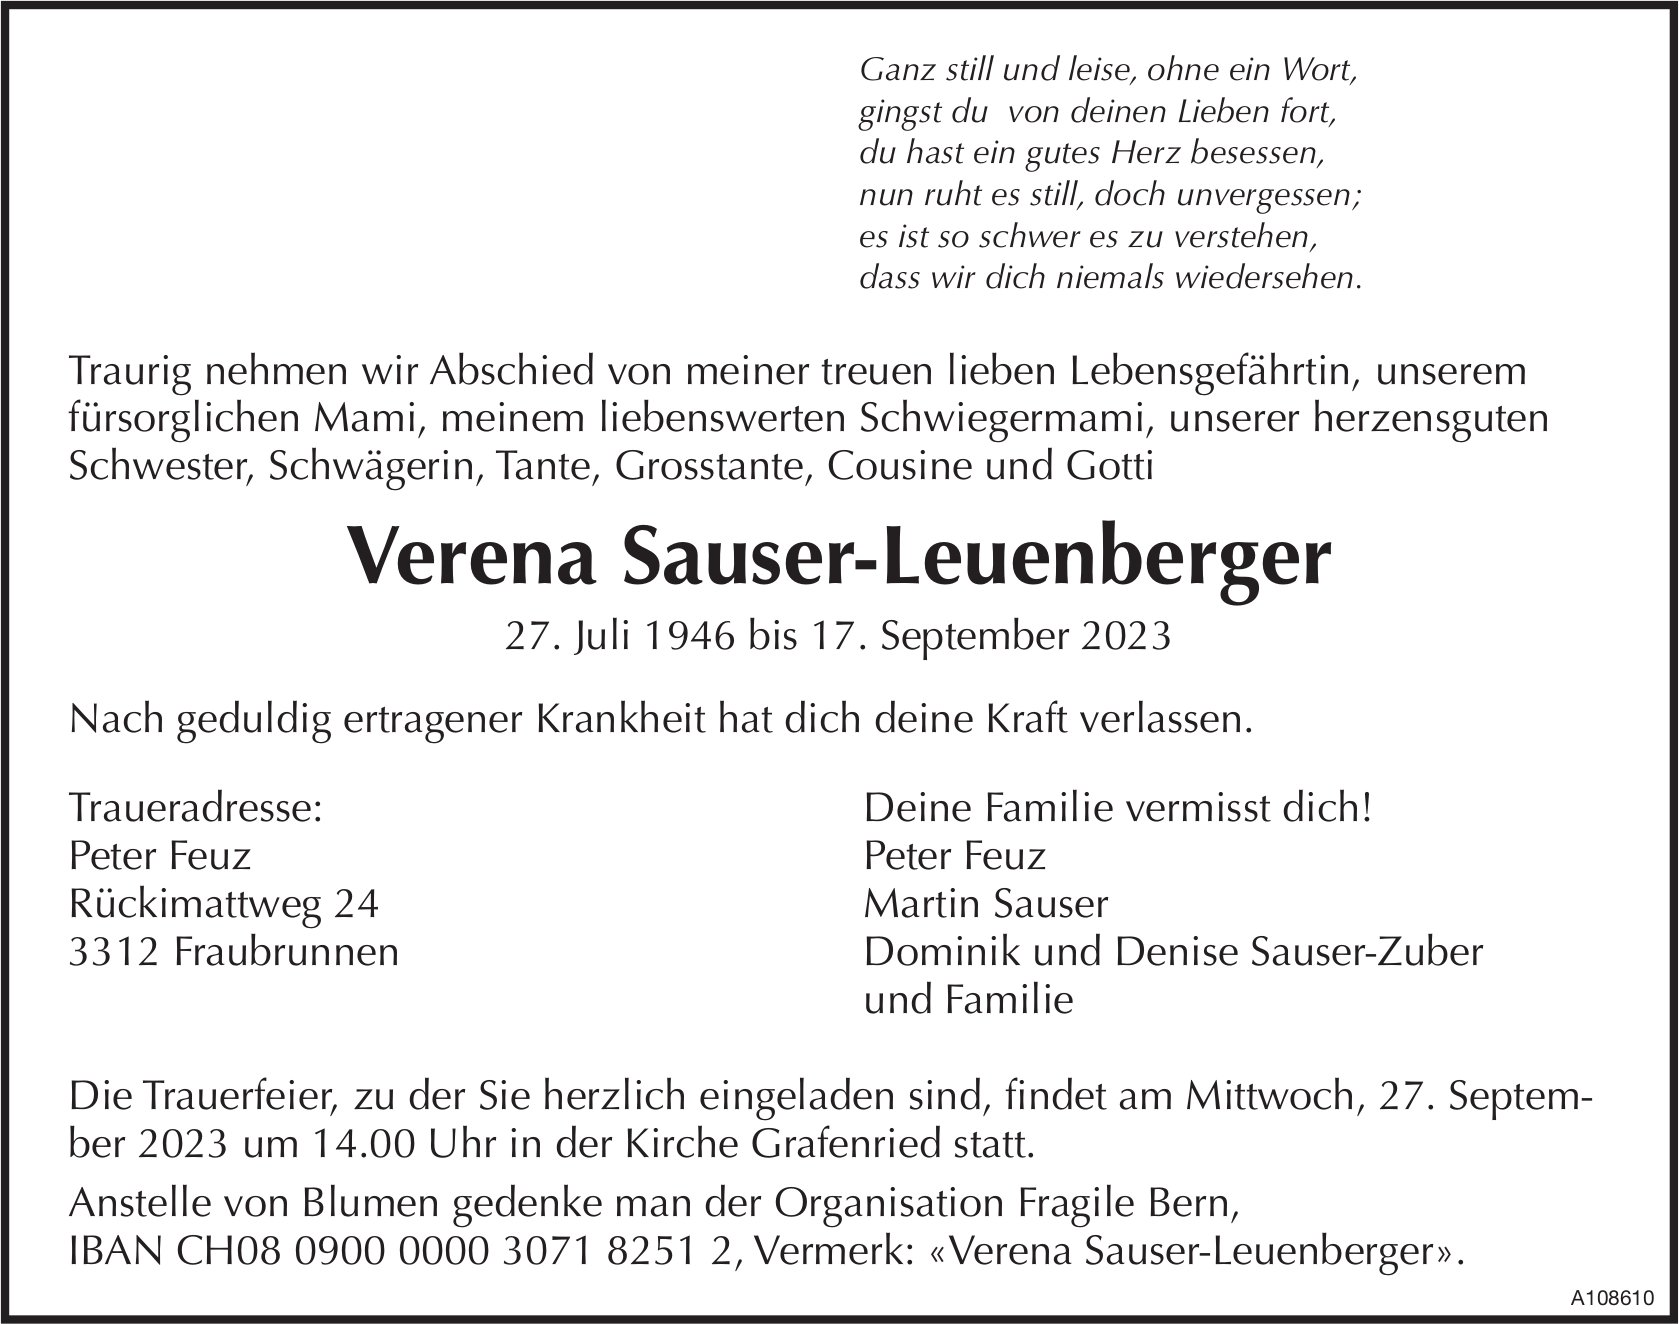 Verena Sauser-Leuenberger, September 2023 / TA